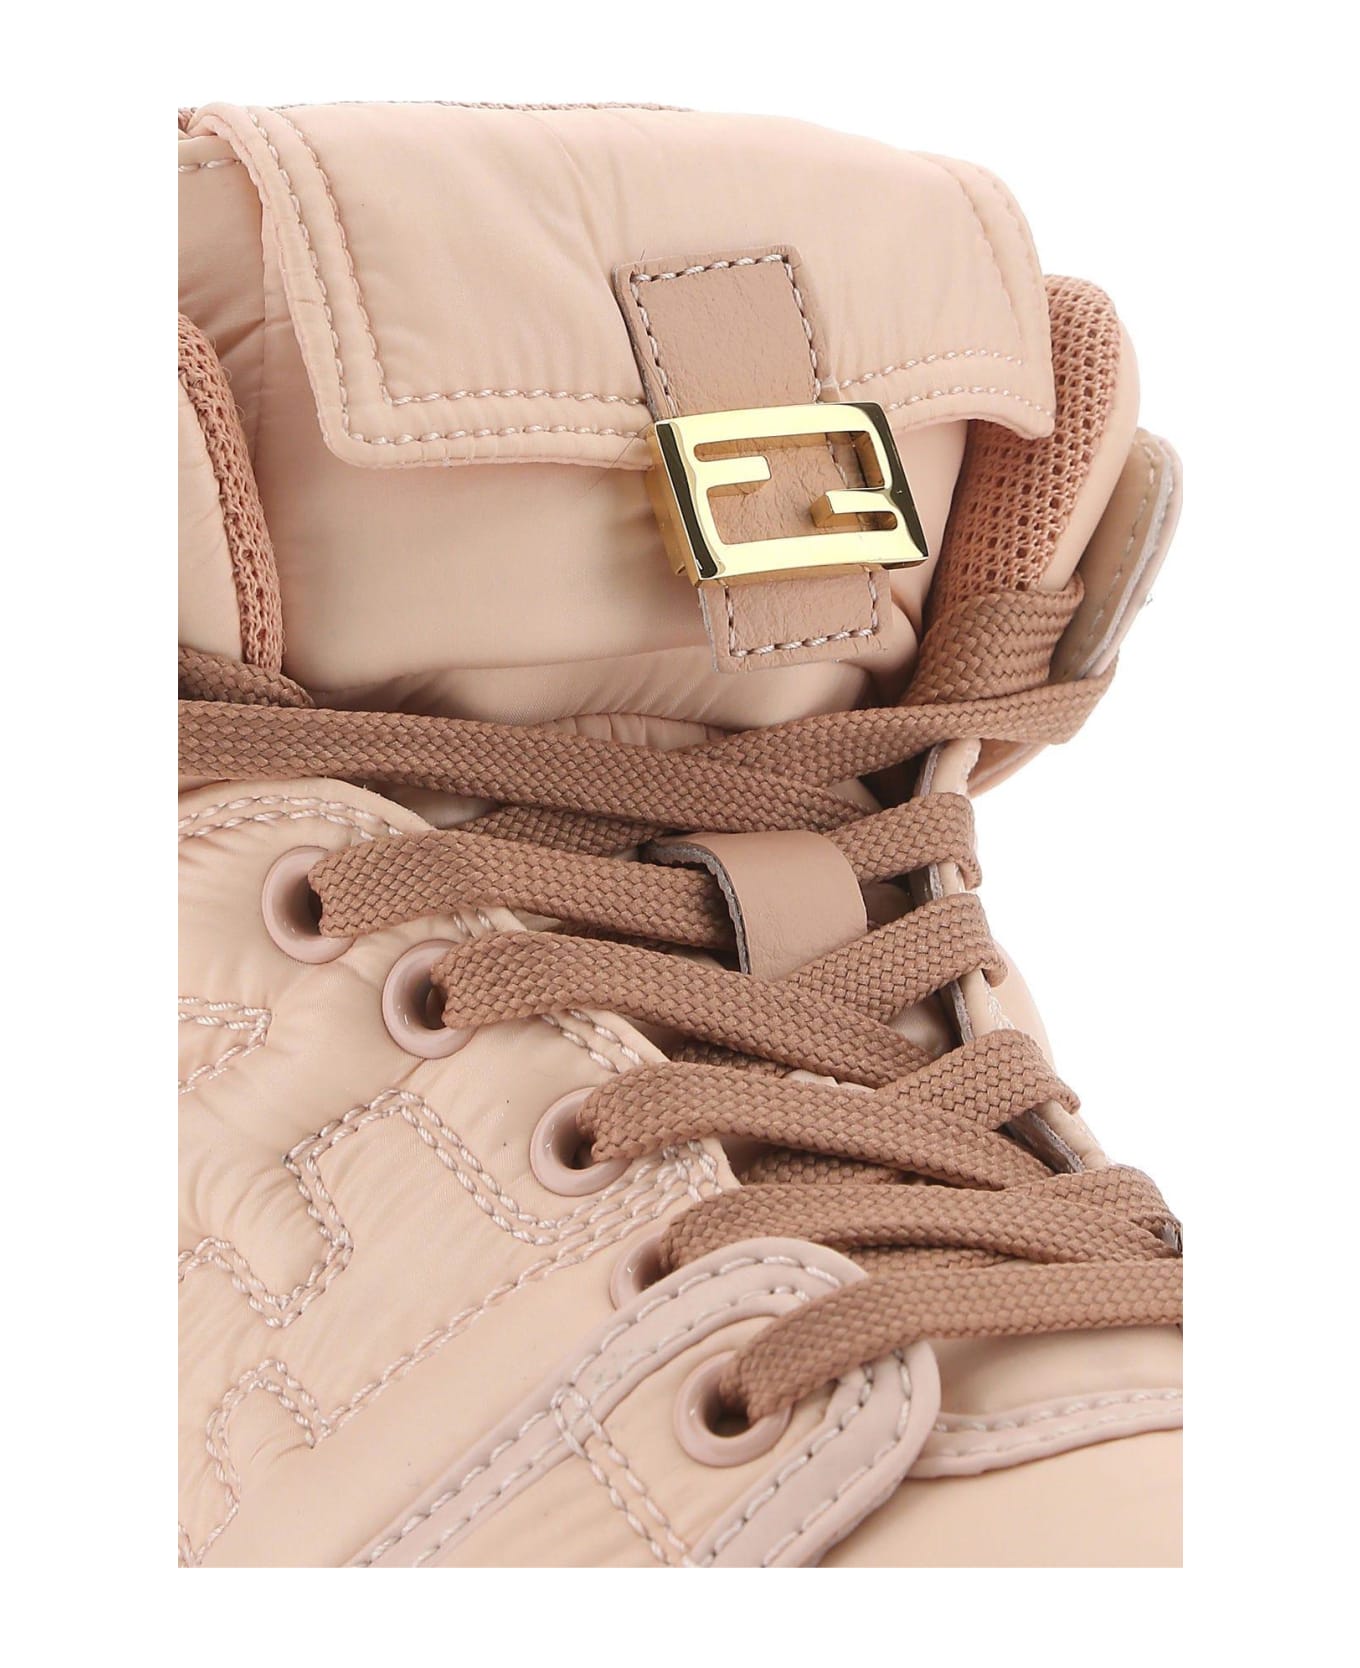 Fendi Pink Nylon Baguette Sneakers - PINK